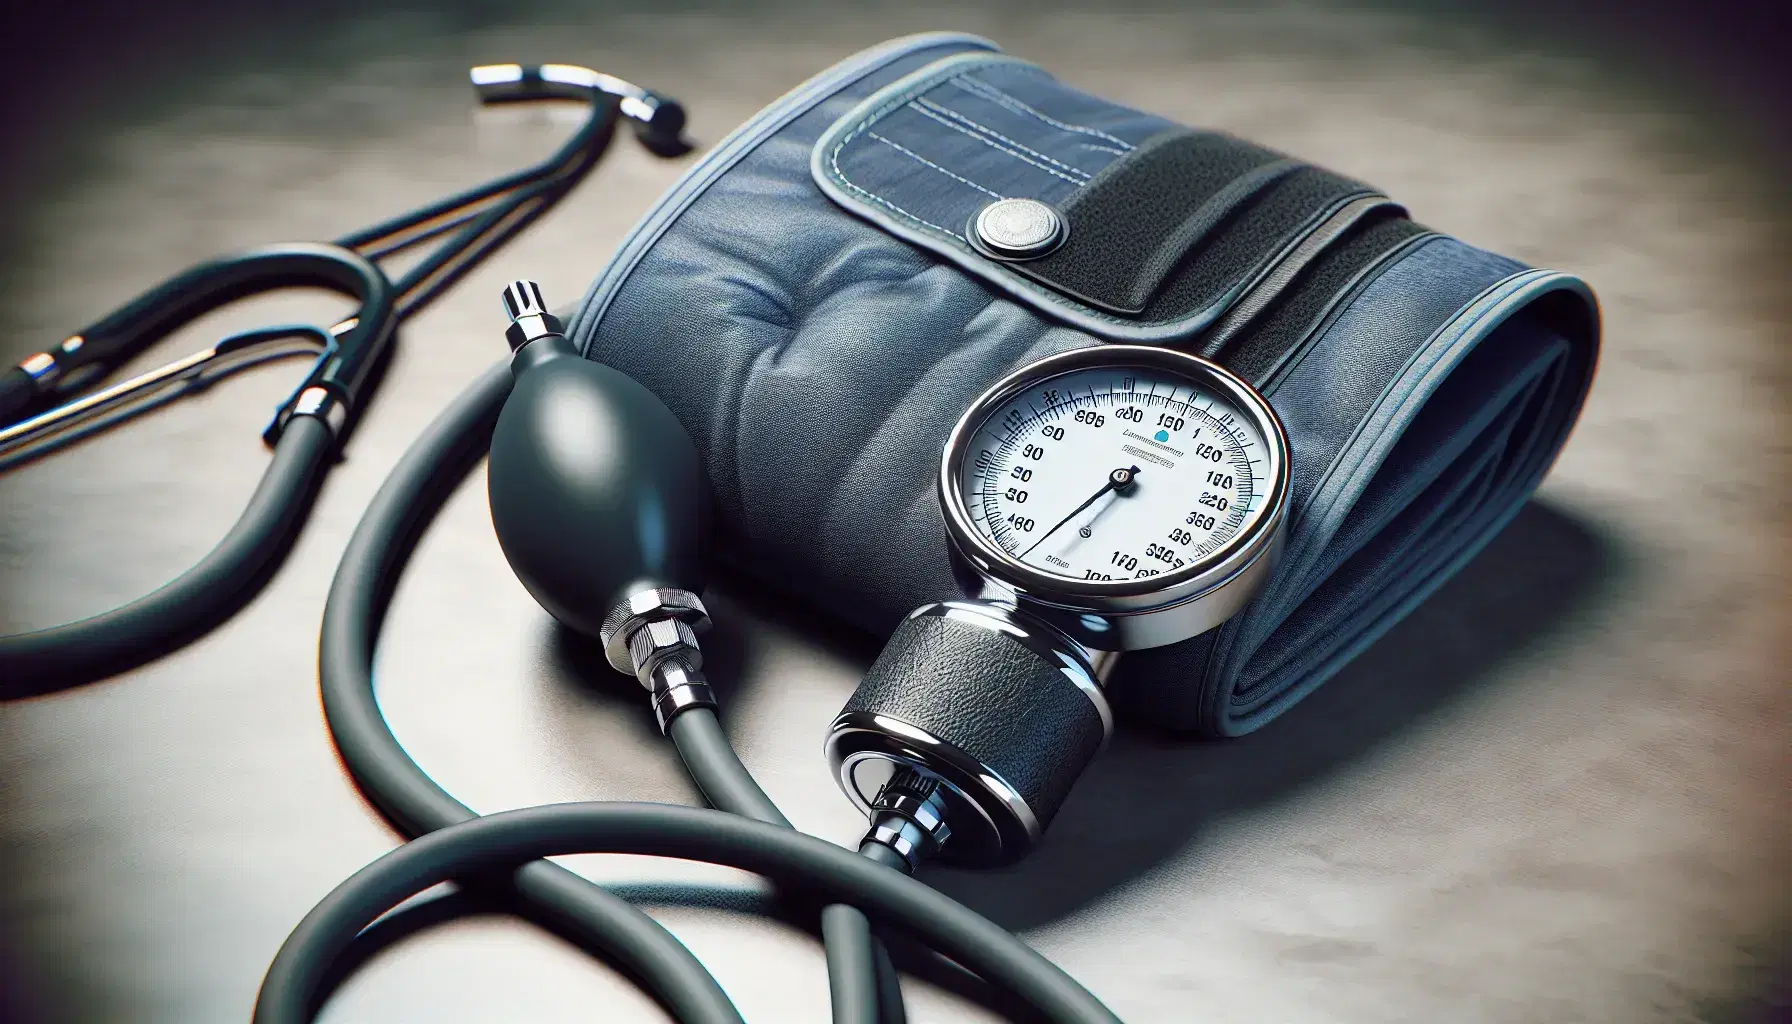 Esfigmomanómetro aneroide con manguito azul oscuro y manómetro circular conectado por tubo gris, junto a pera de goma negra para medición de presión arterial.